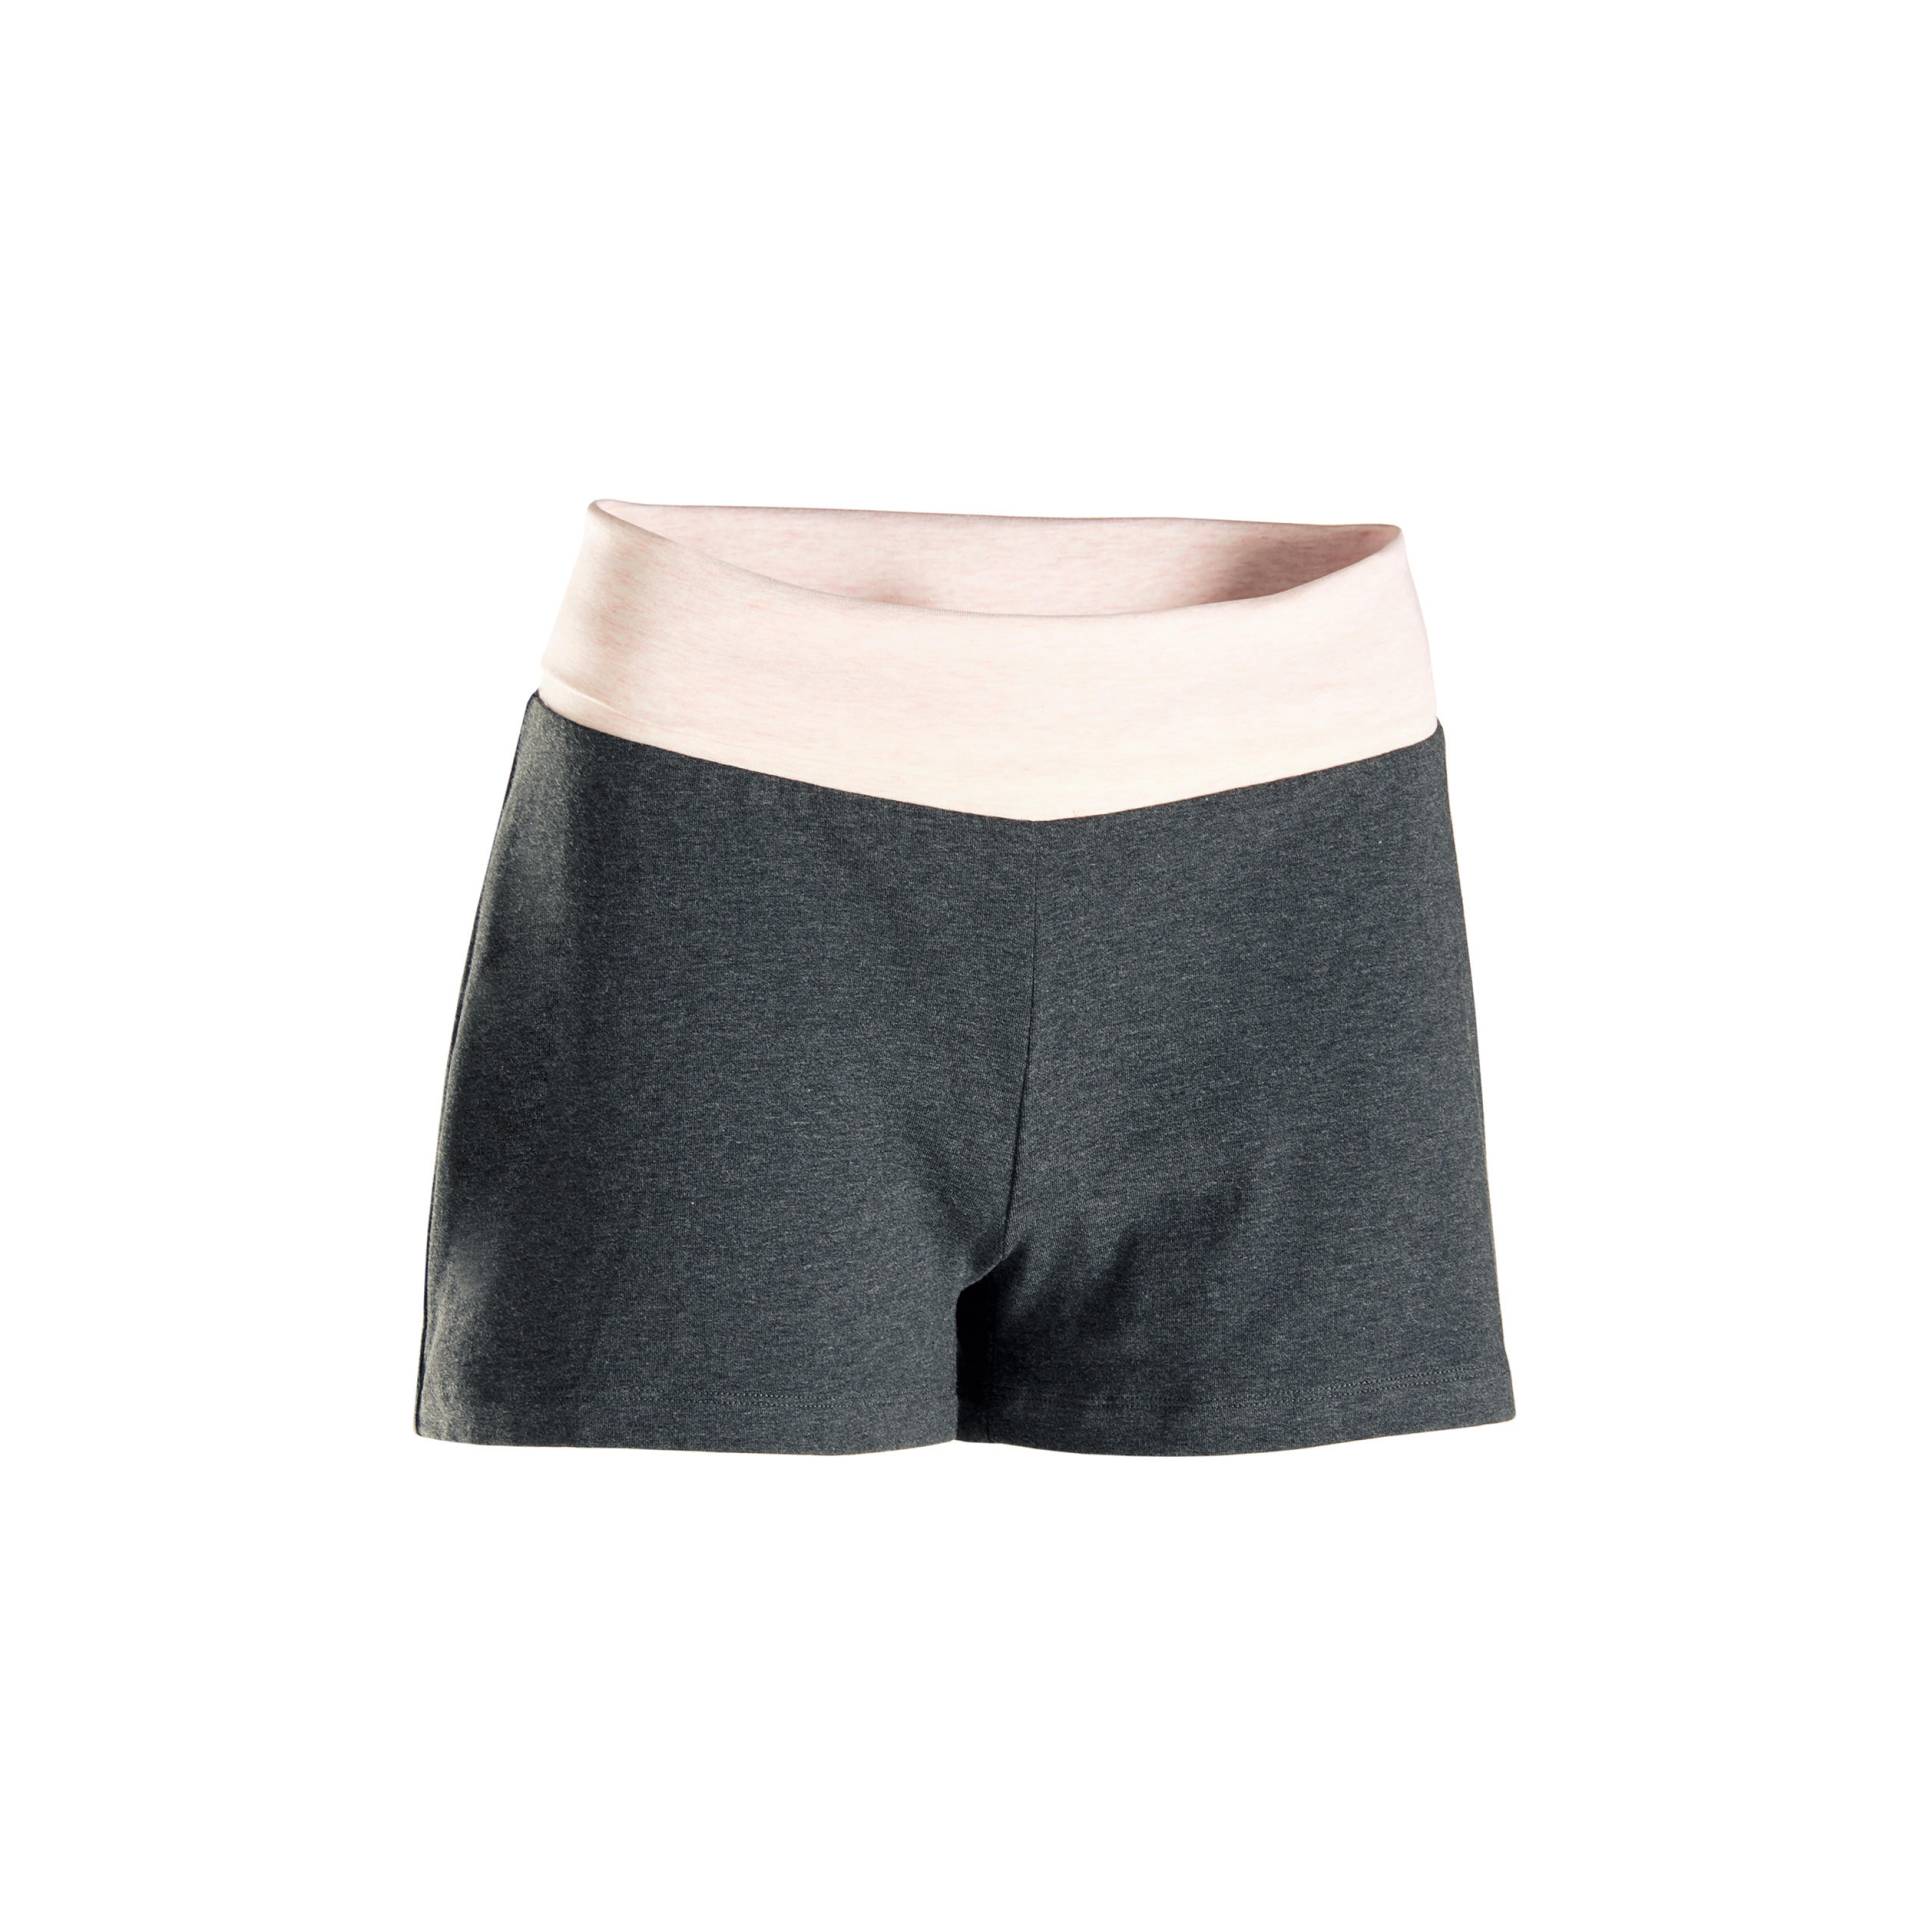 Shorts Yoga Damen Baumwolle - grau/rosa von KIMJALY